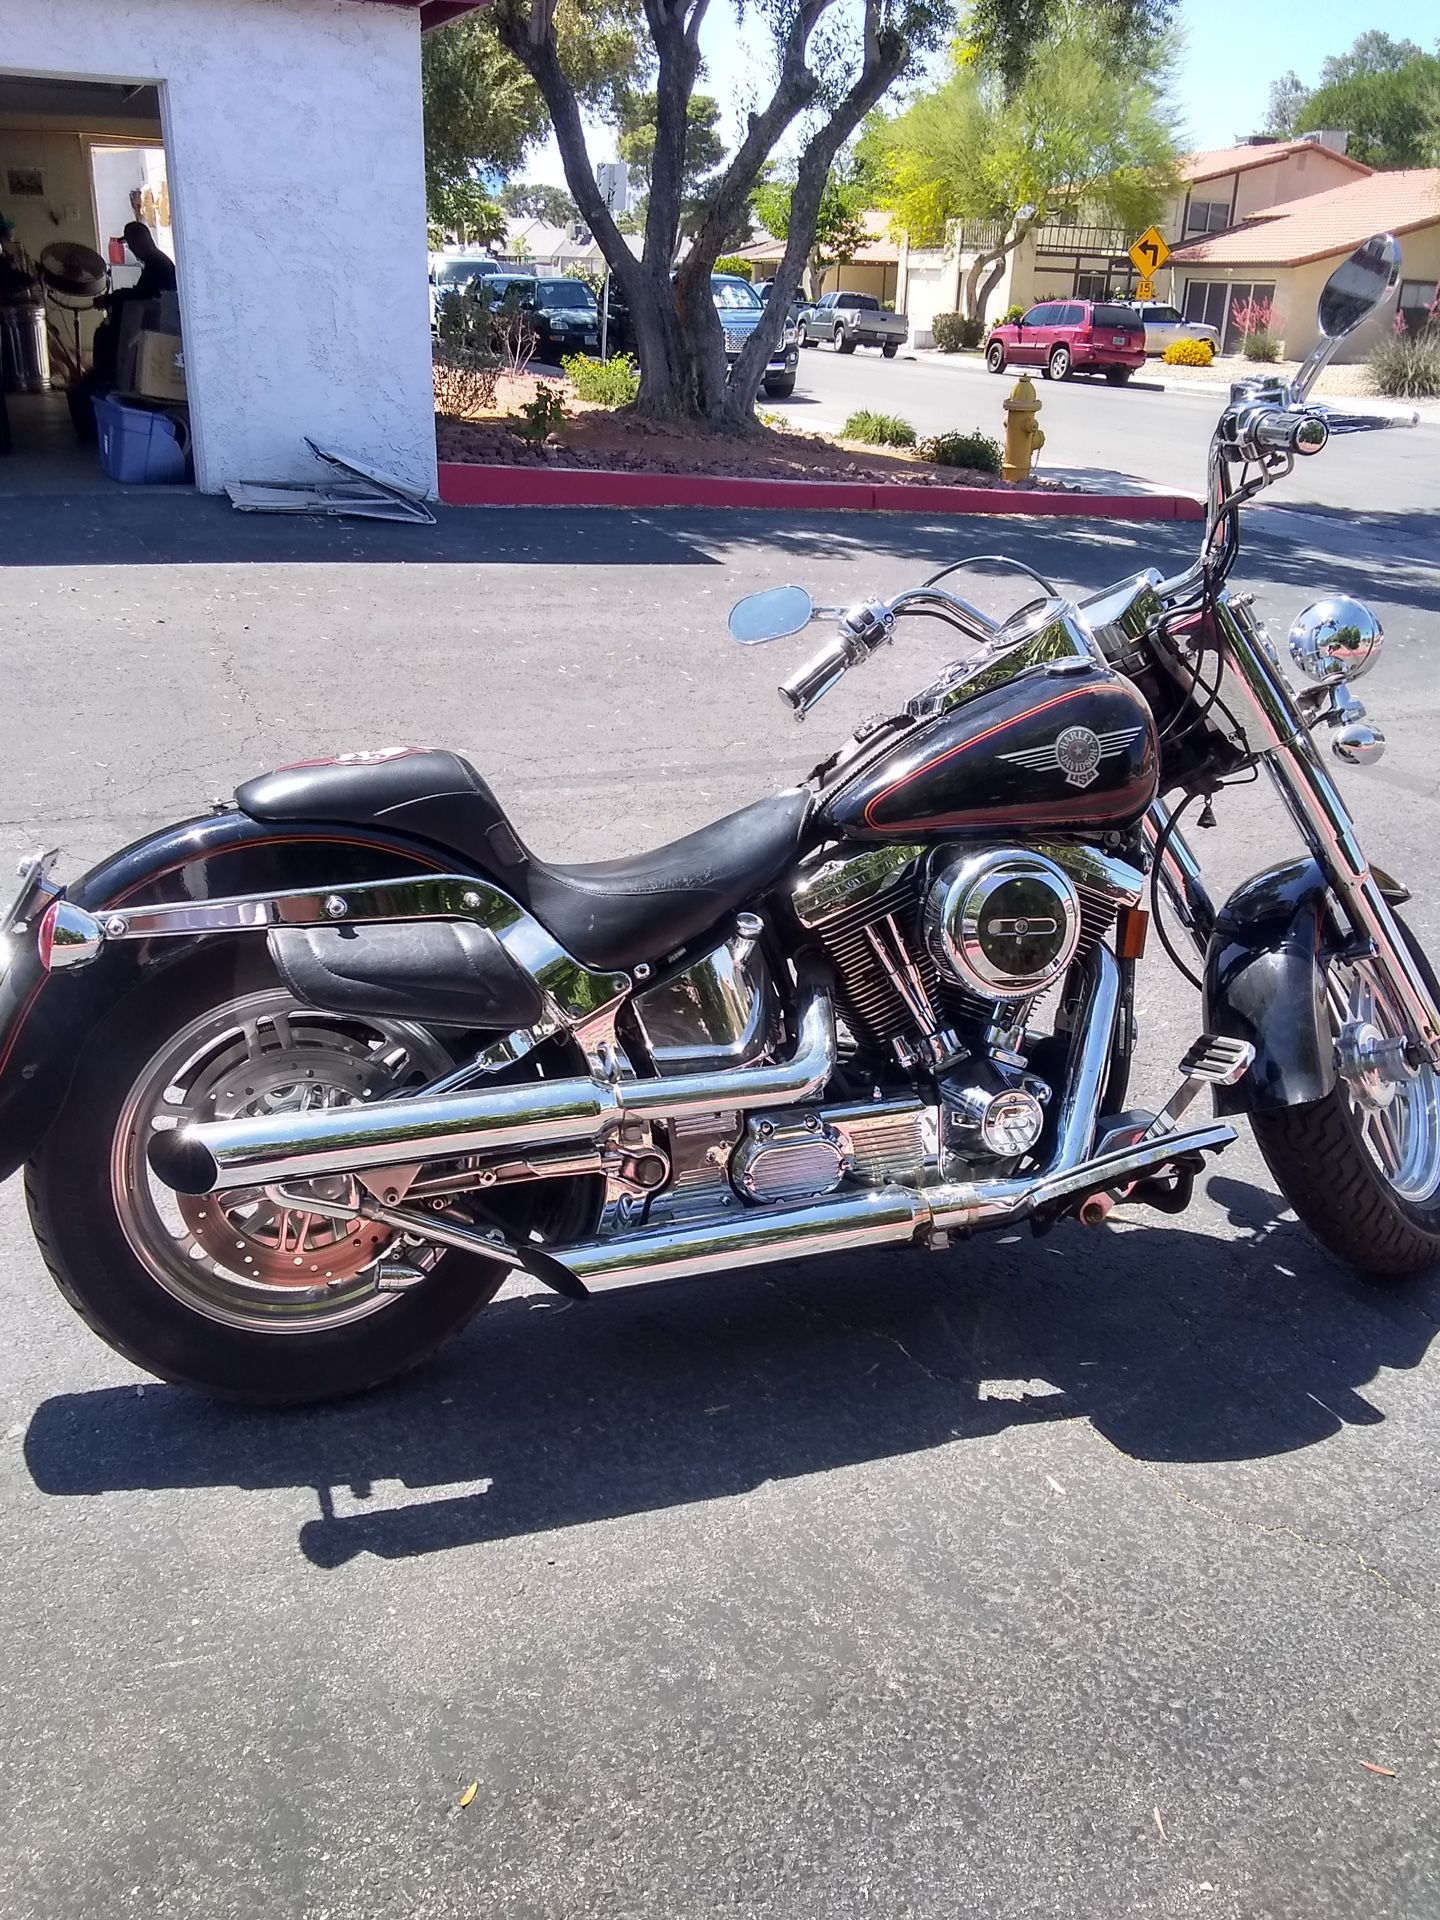 1999 Harley Davidson Custom Fat Boy 26k Miles